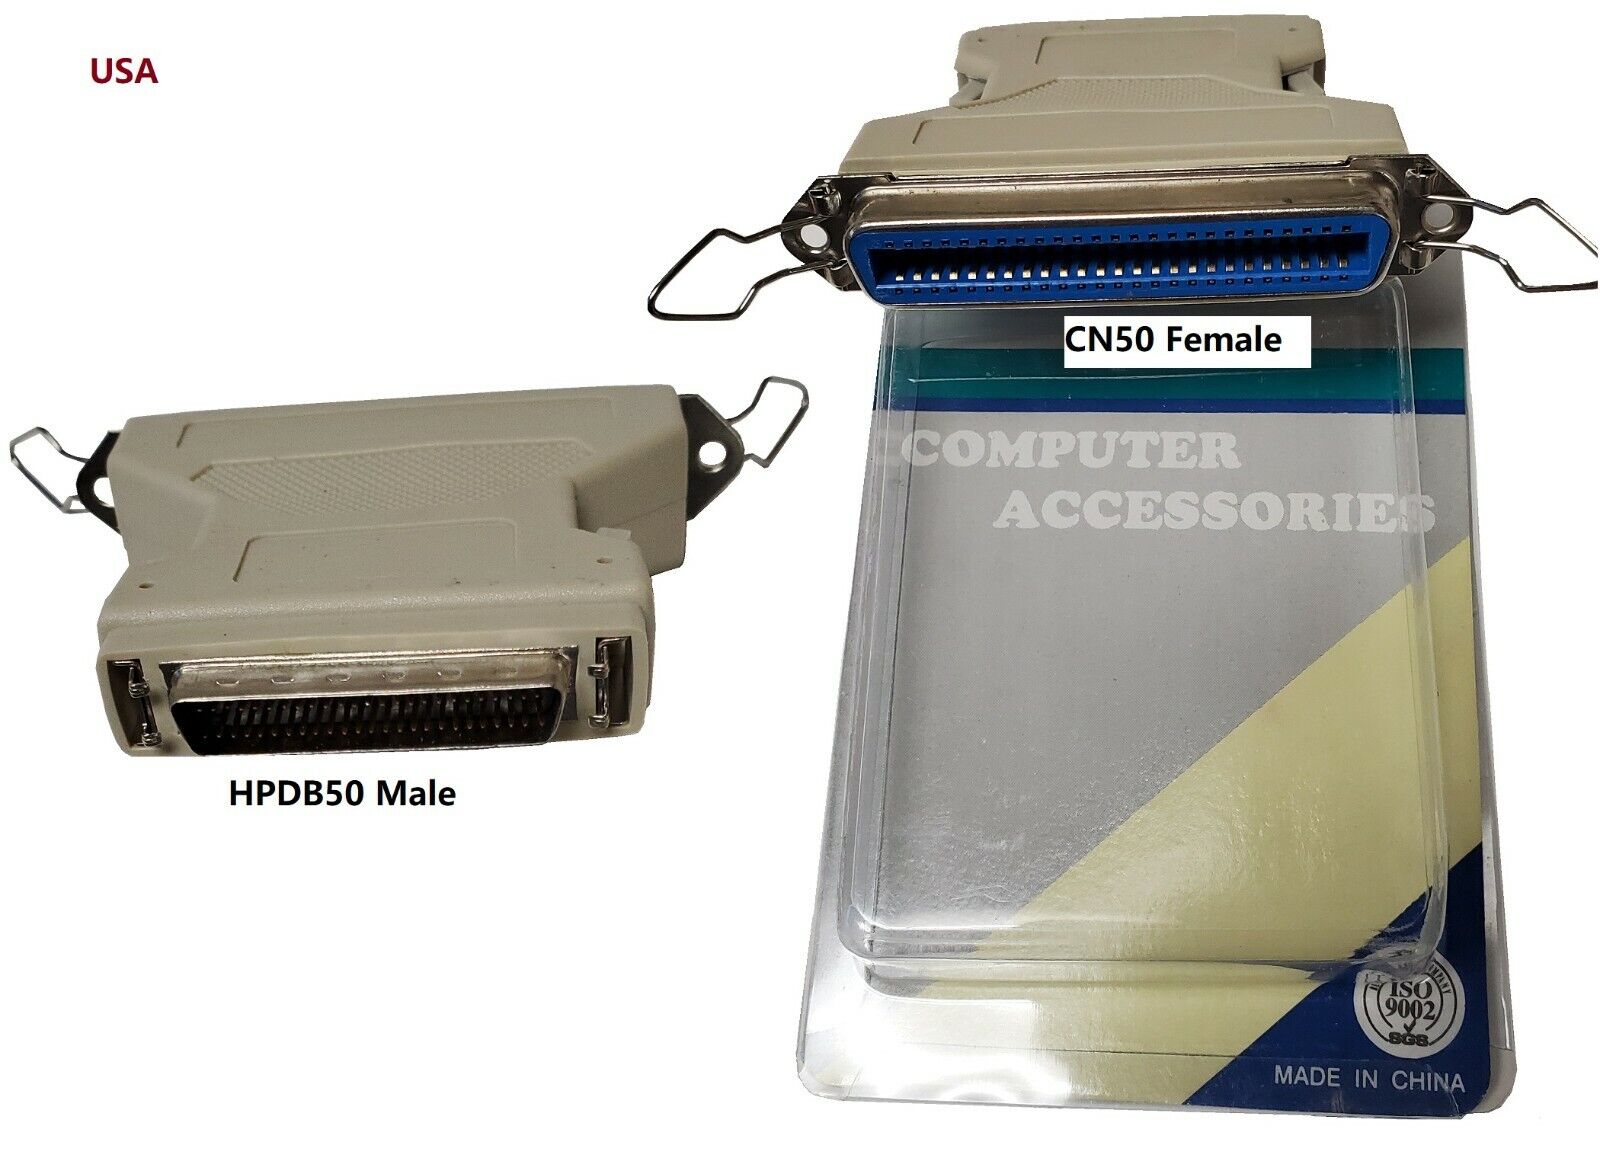 PTC SCSI Adapter, HPDB50 (Half Pitch DB50) Male to CN50 (Centronics 50) Female